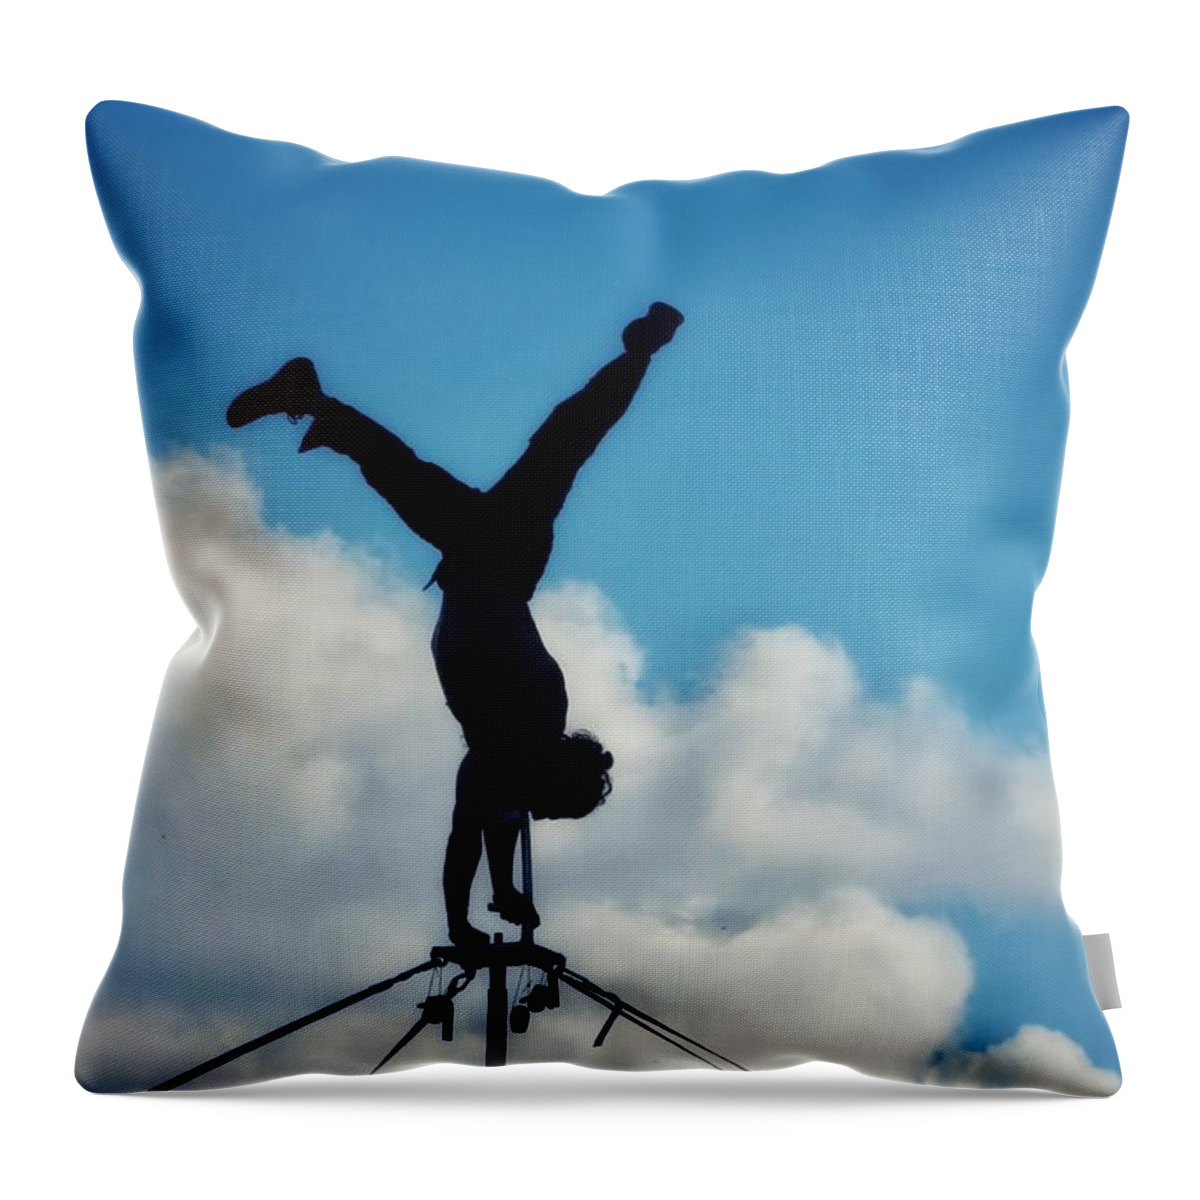 Sky Throw Pillow featuring the photograph Reach for the Sky 2 by Diana Rajala